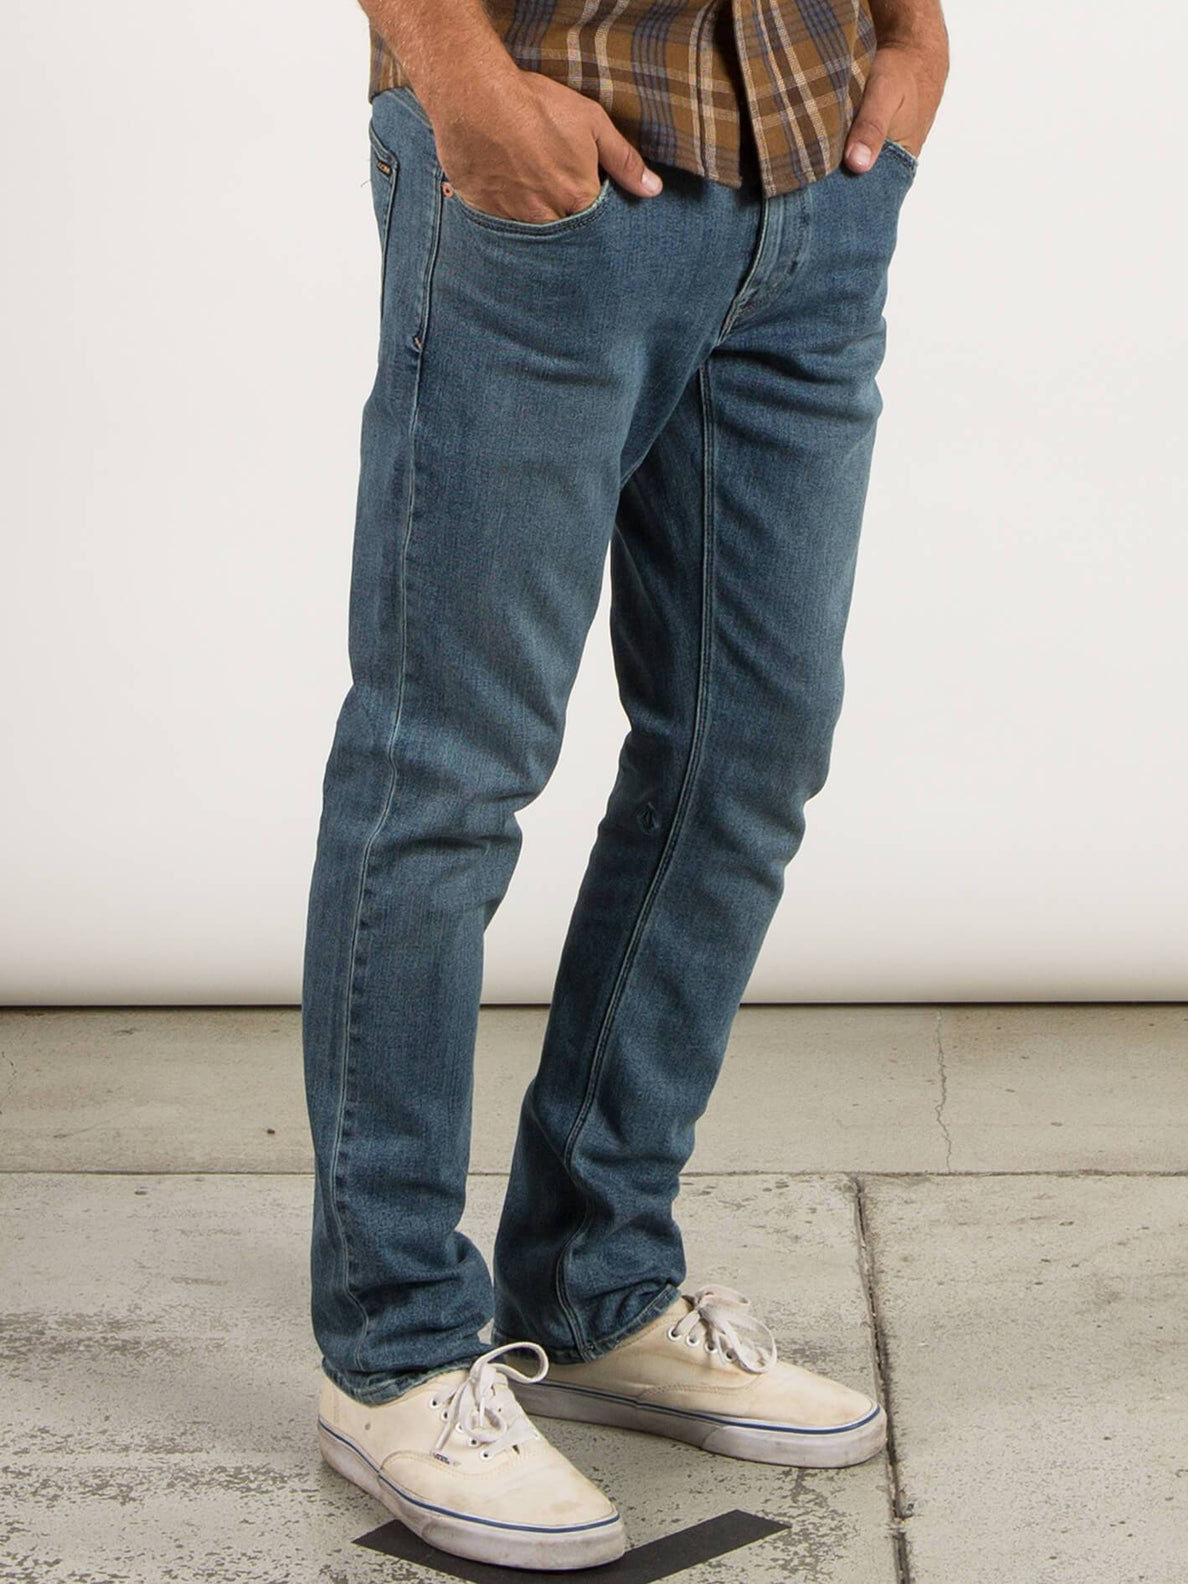 seventies jeans